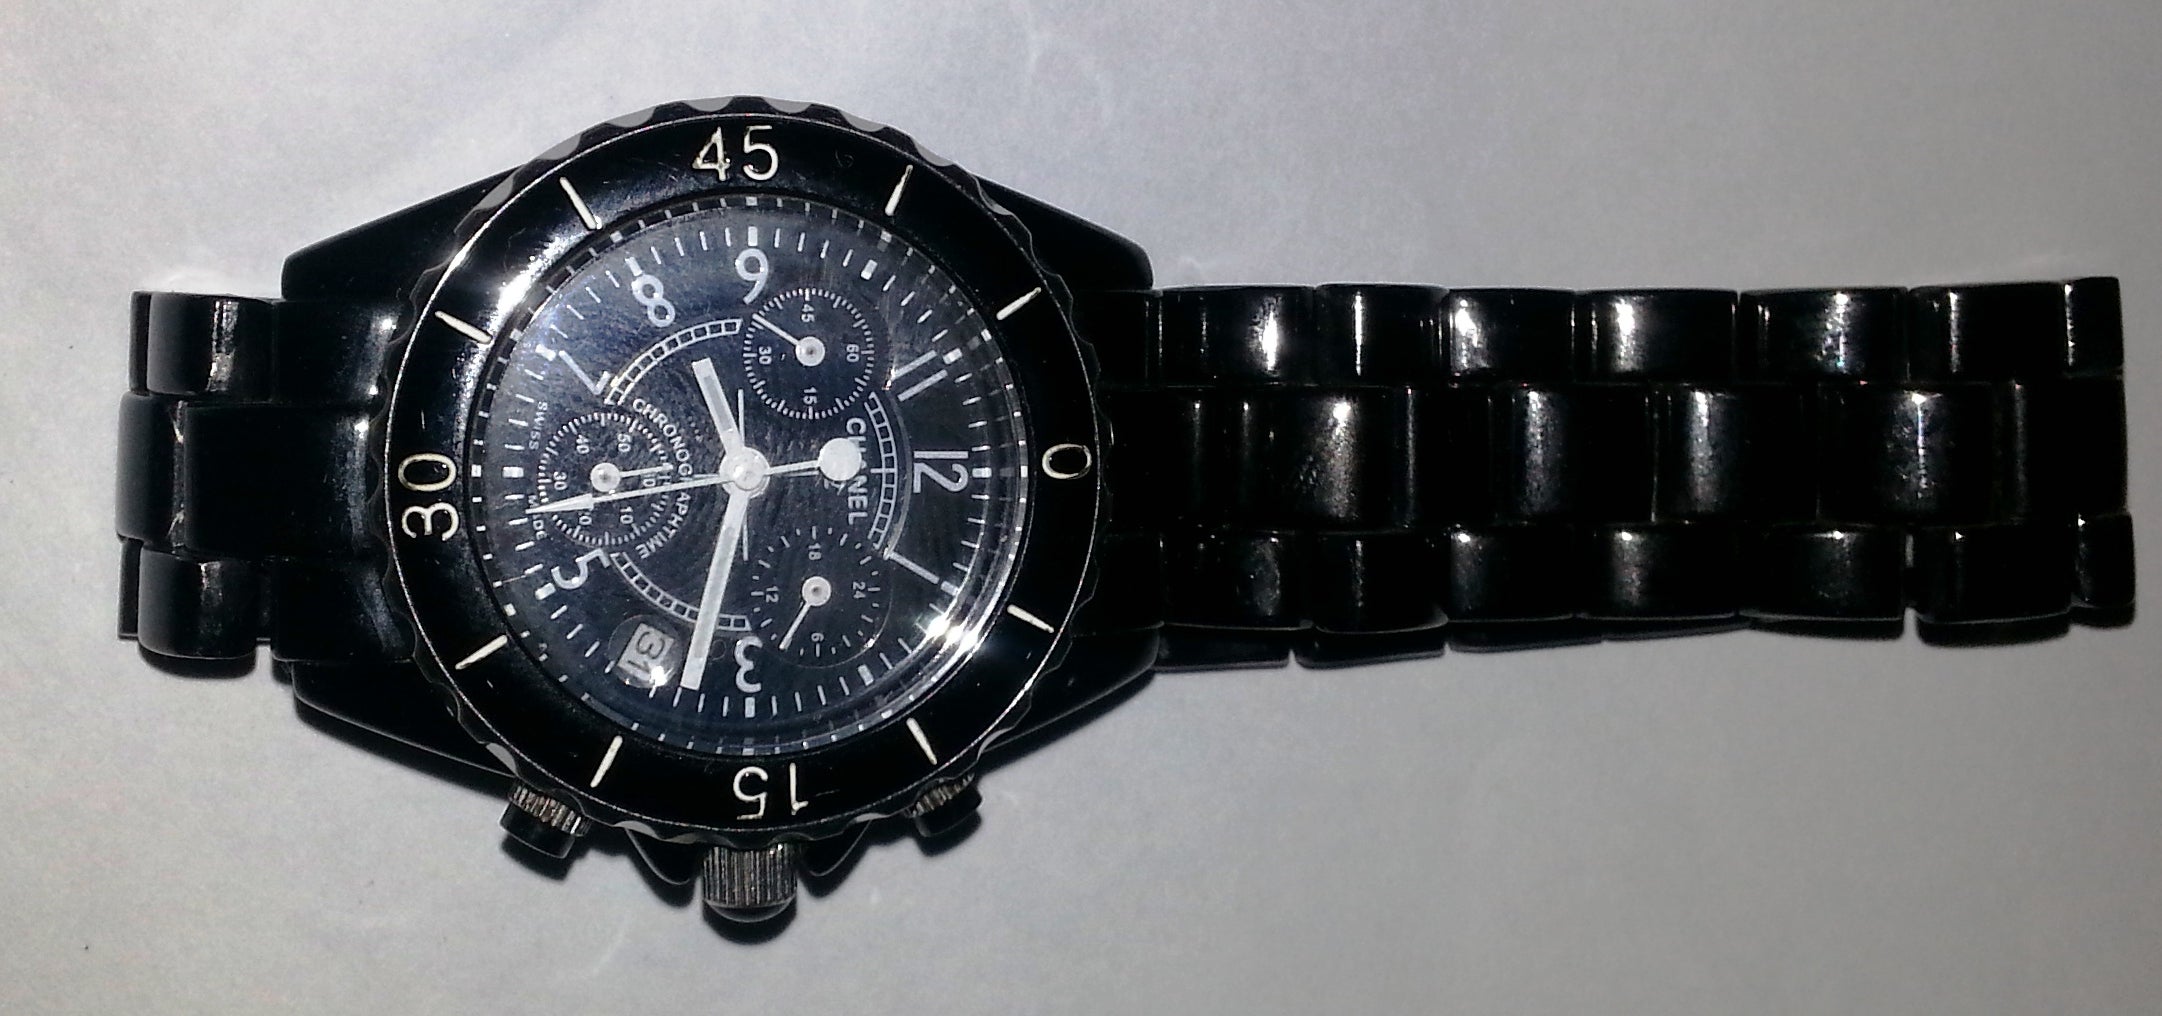 Chanel Chronograph Zg 58096 watch | WatchUSeek Watch Forums